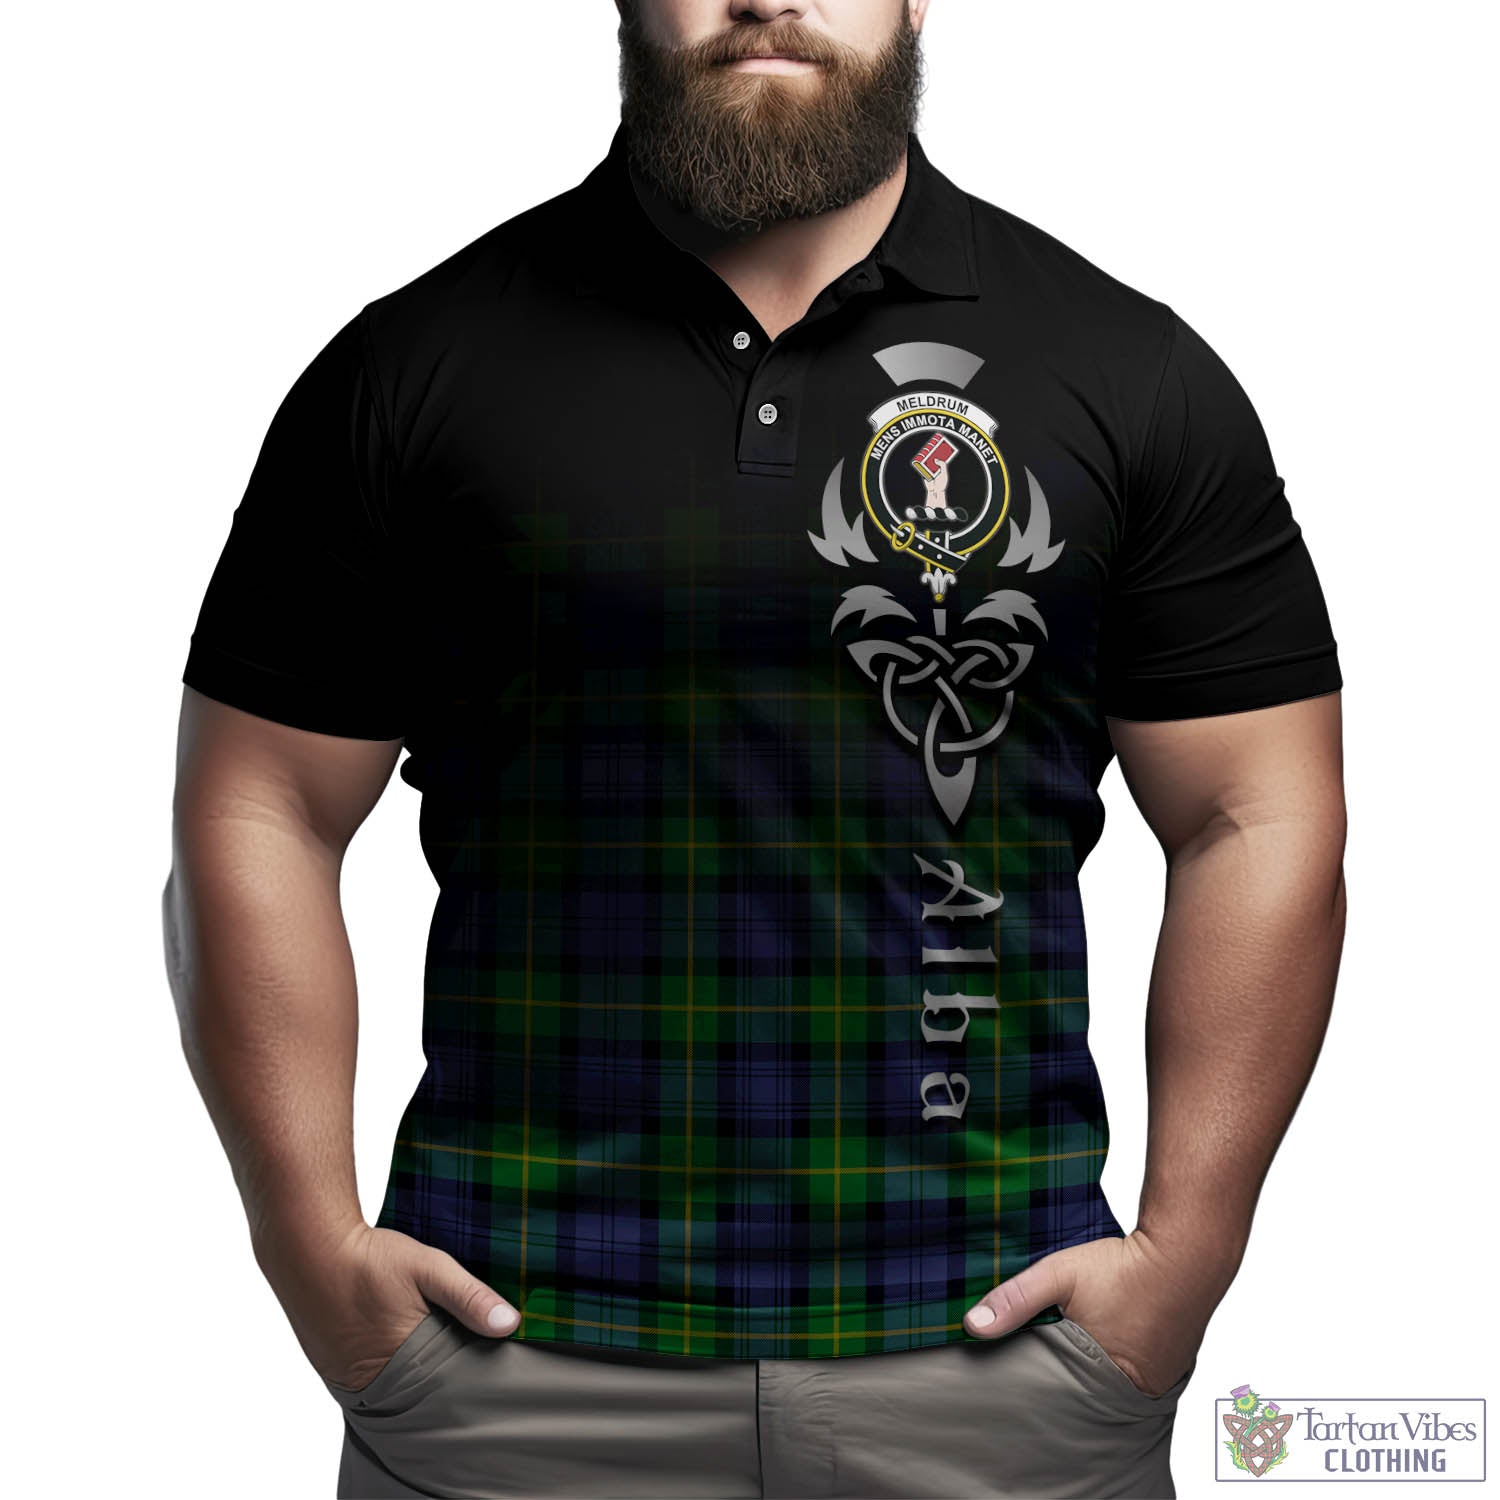 Tartan Vibes Clothing Meldrum Tartan Polo Shirt Featuring Alba Gu Brath Family Crest Celtic Inspired